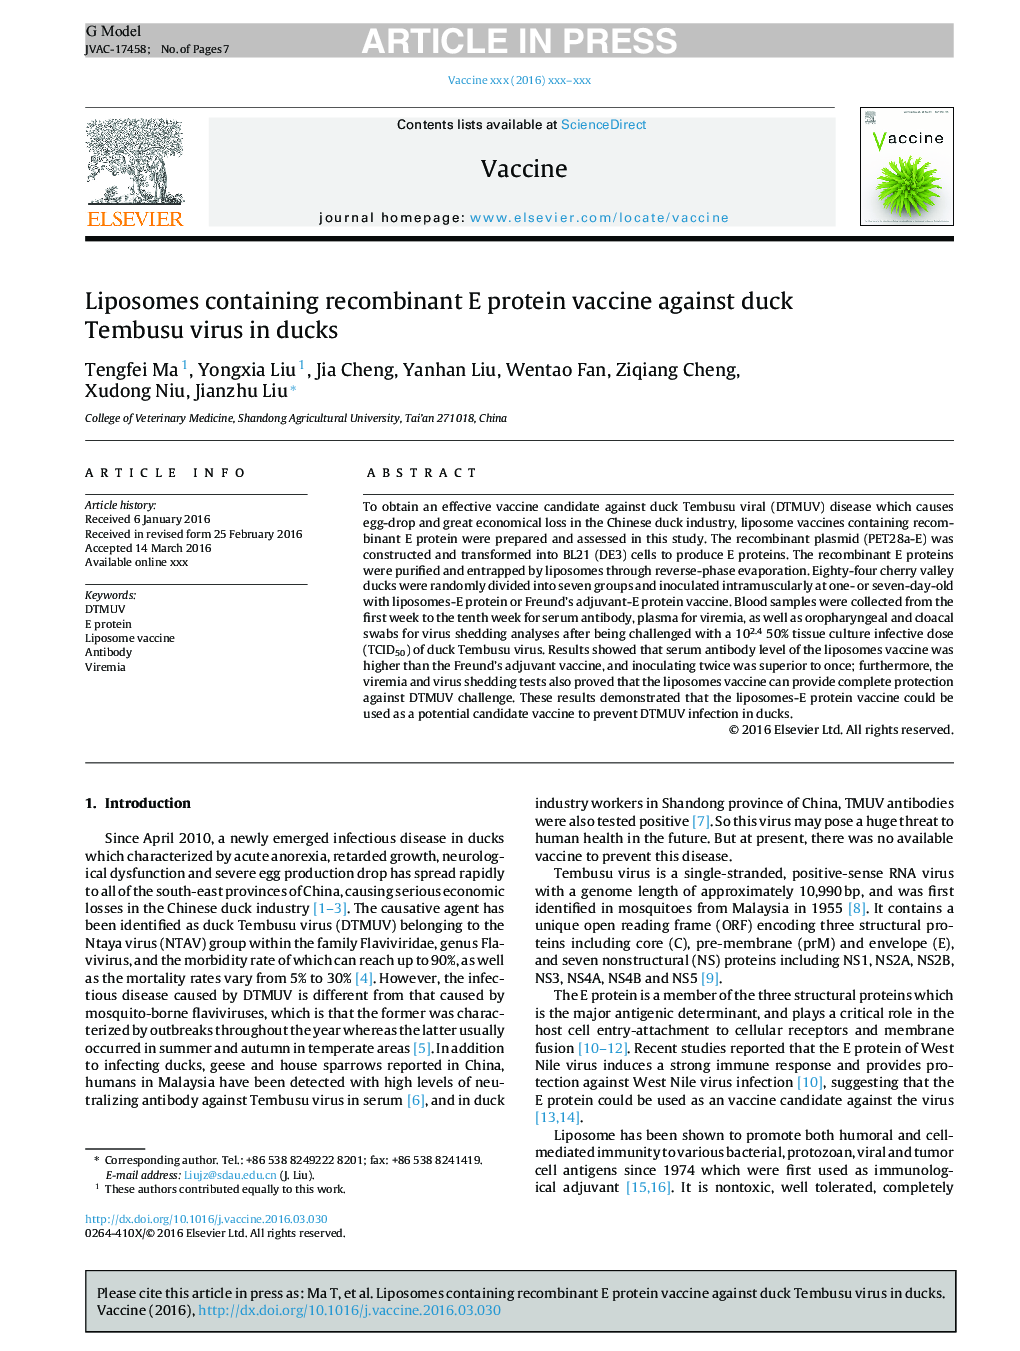 Liposomes containing recombinant E protein vaccine against duck Tembusu virus in ducks